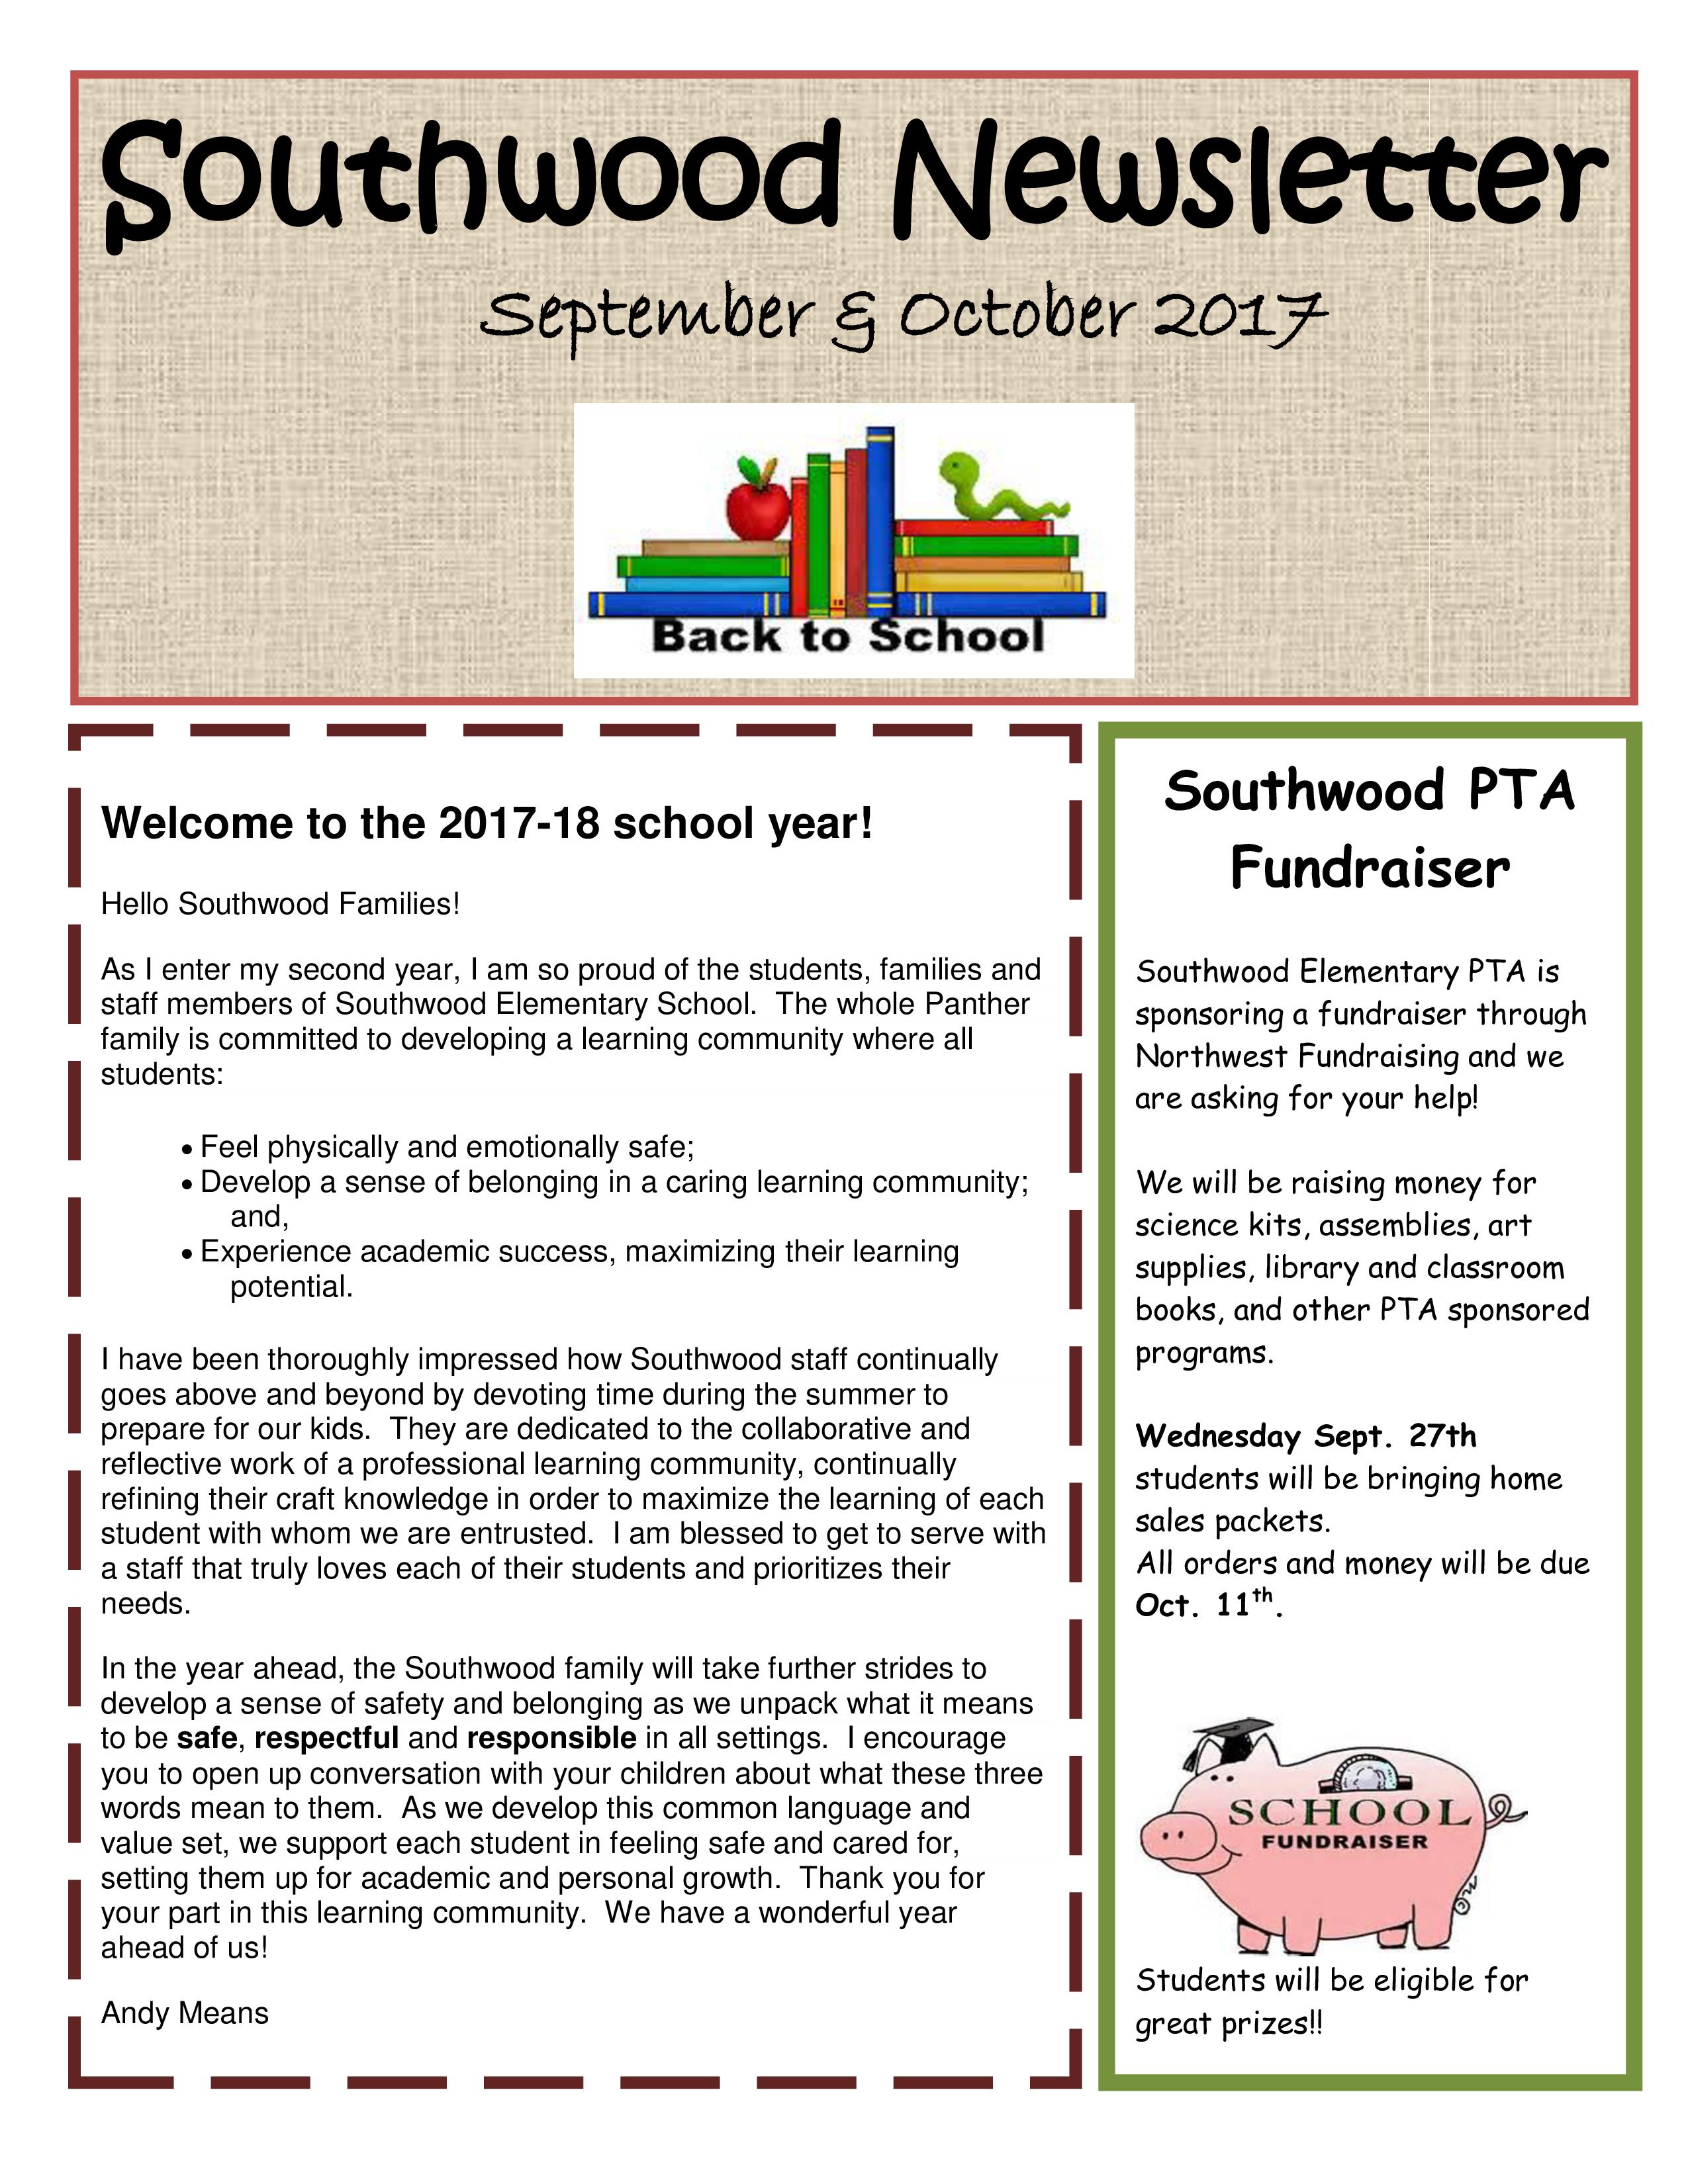 kindercare discovery preschool november parent newsletter